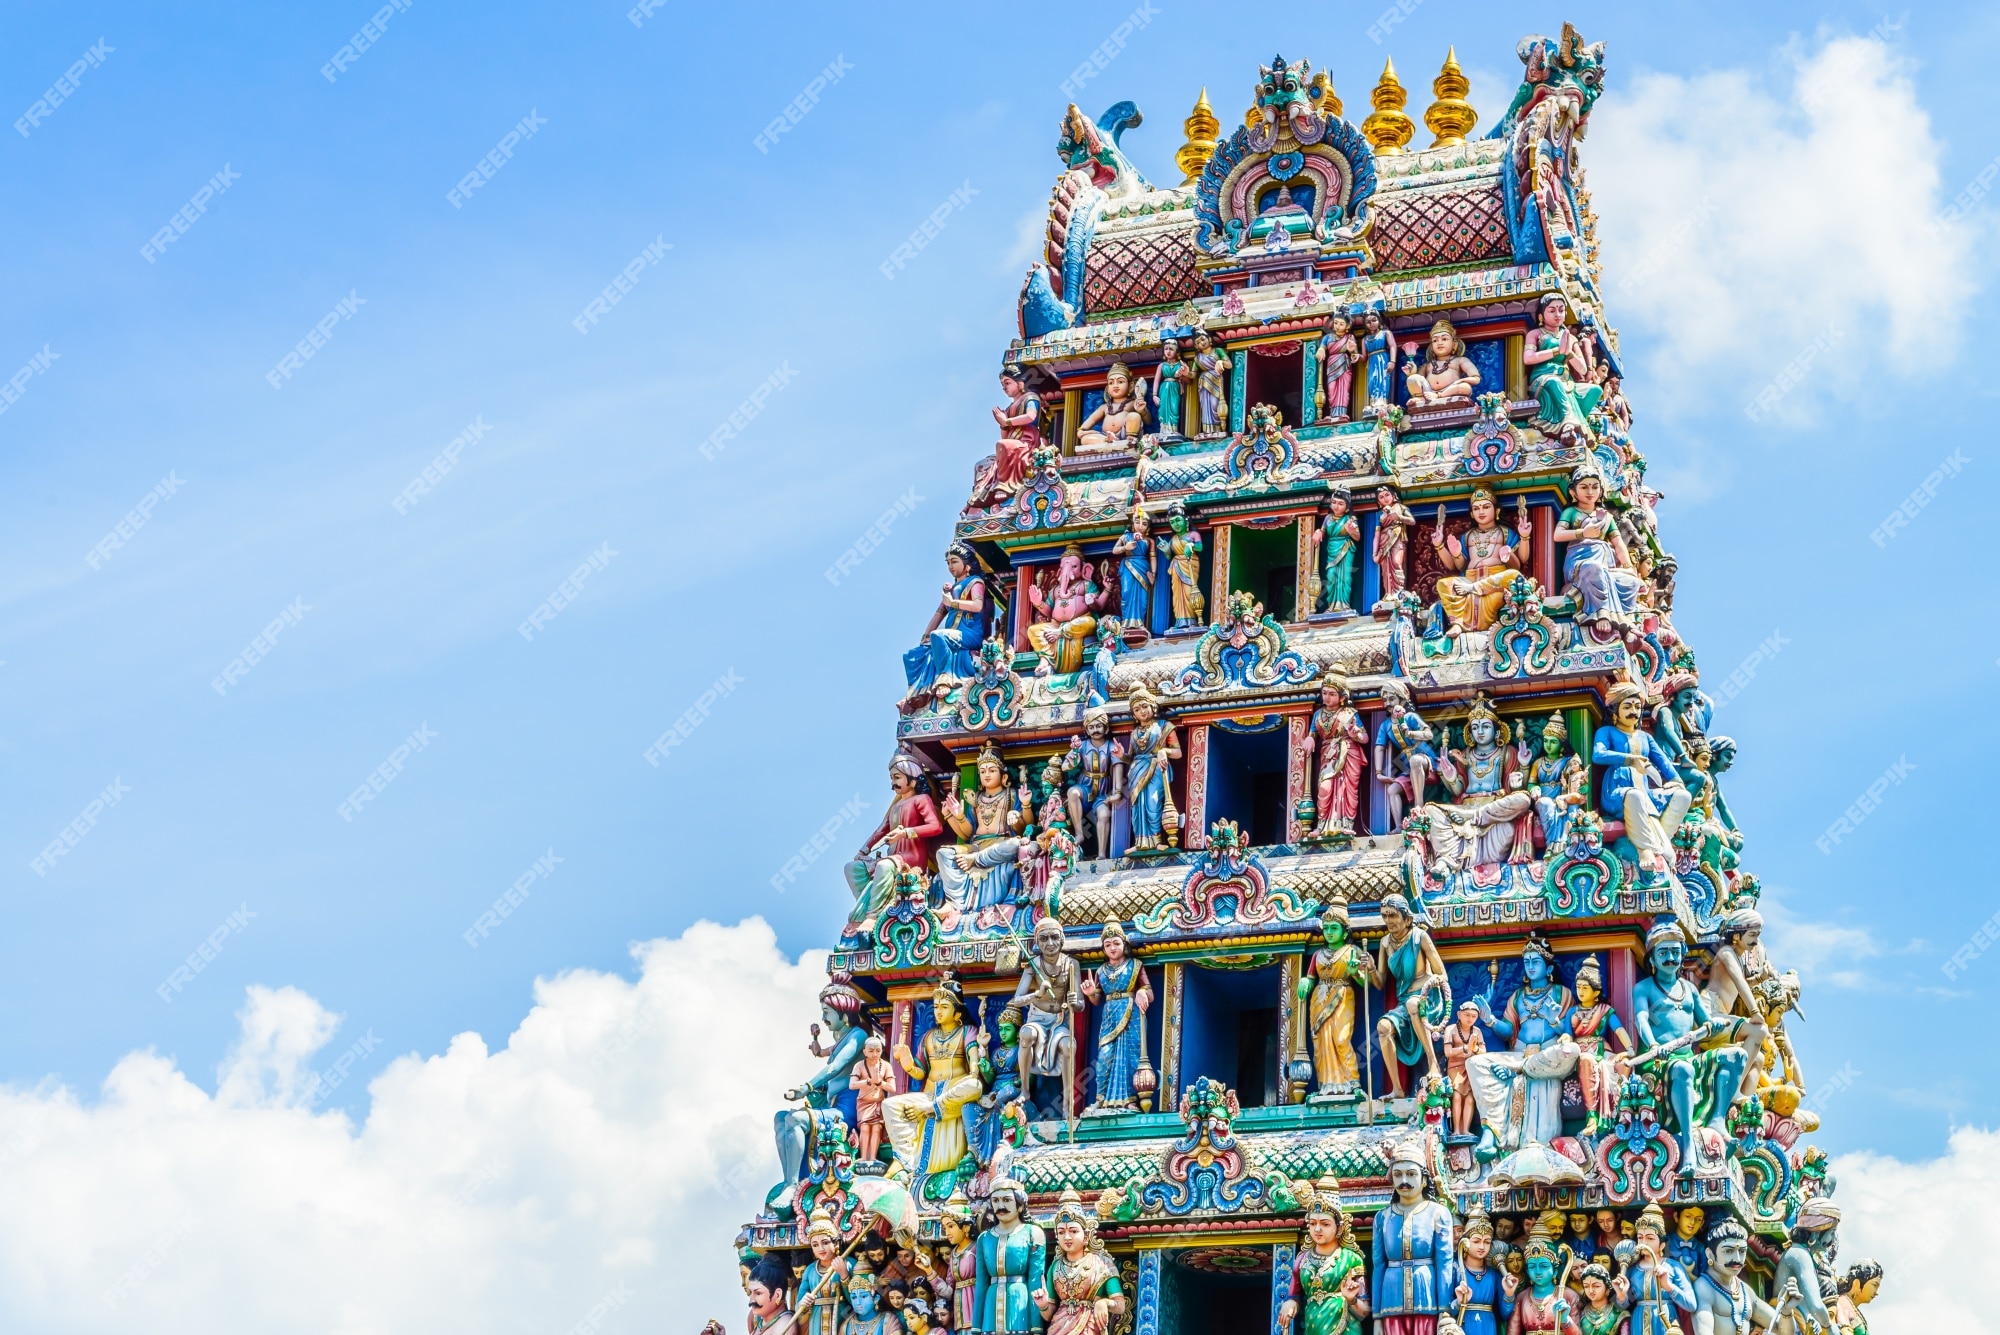 Hindu Temple Images - Free Download on Freepik